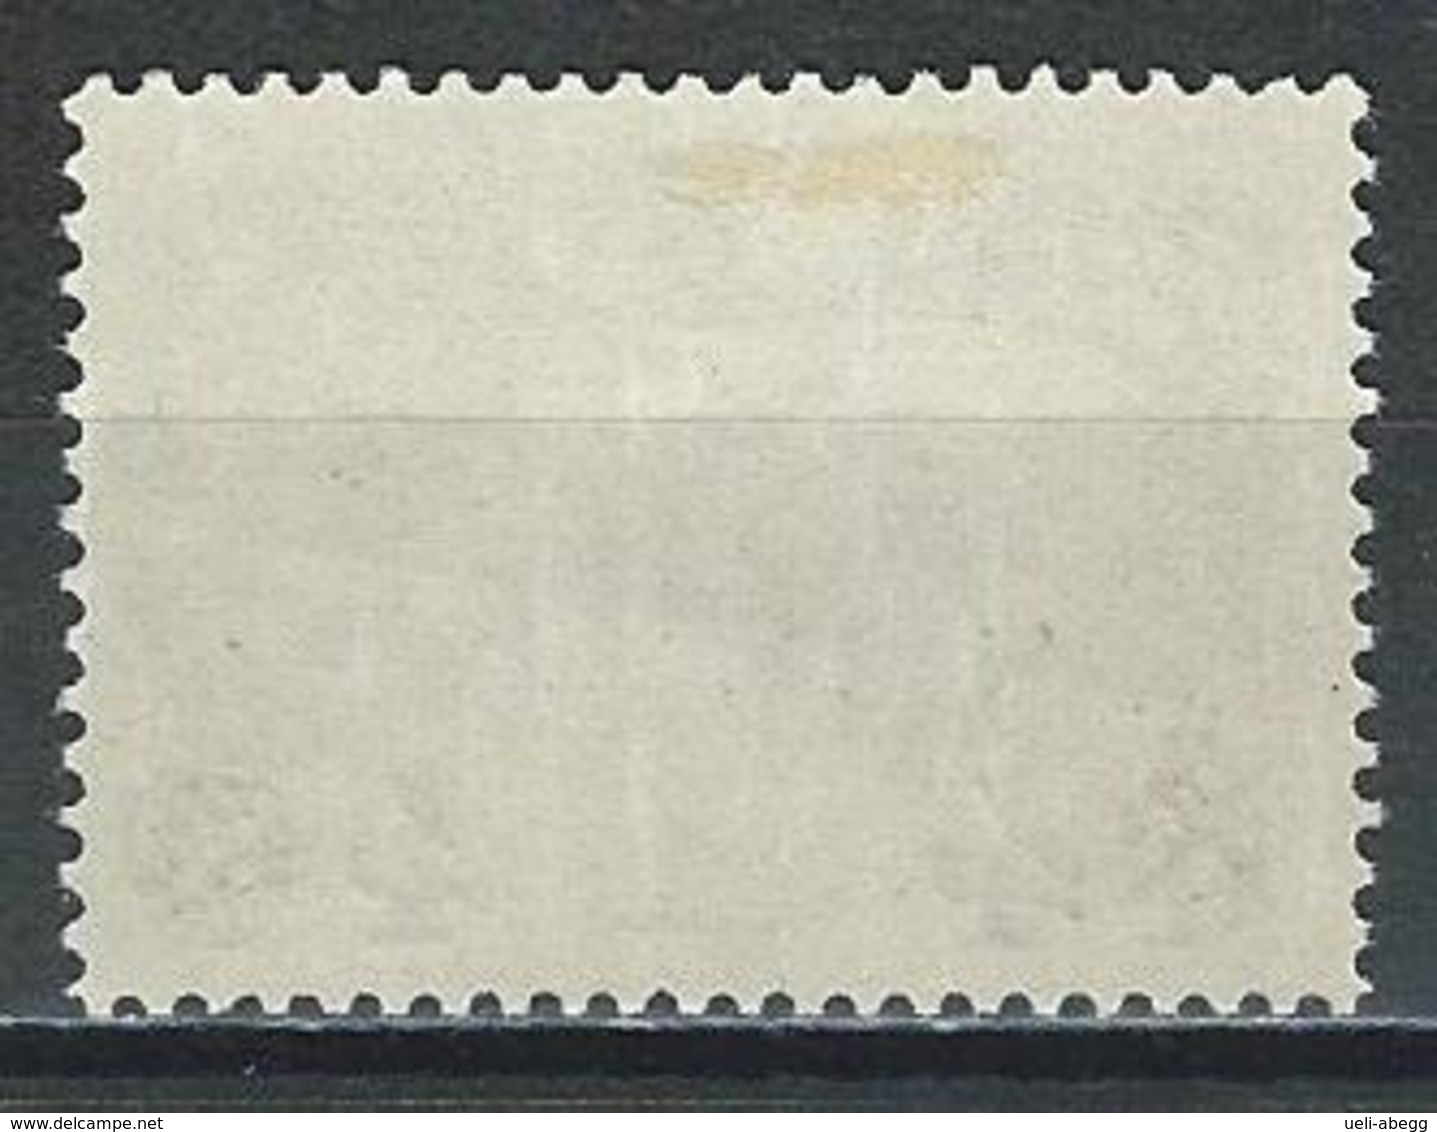 Belgien Mi Postpak 7  * MH - Reisgoedzegels [BA]